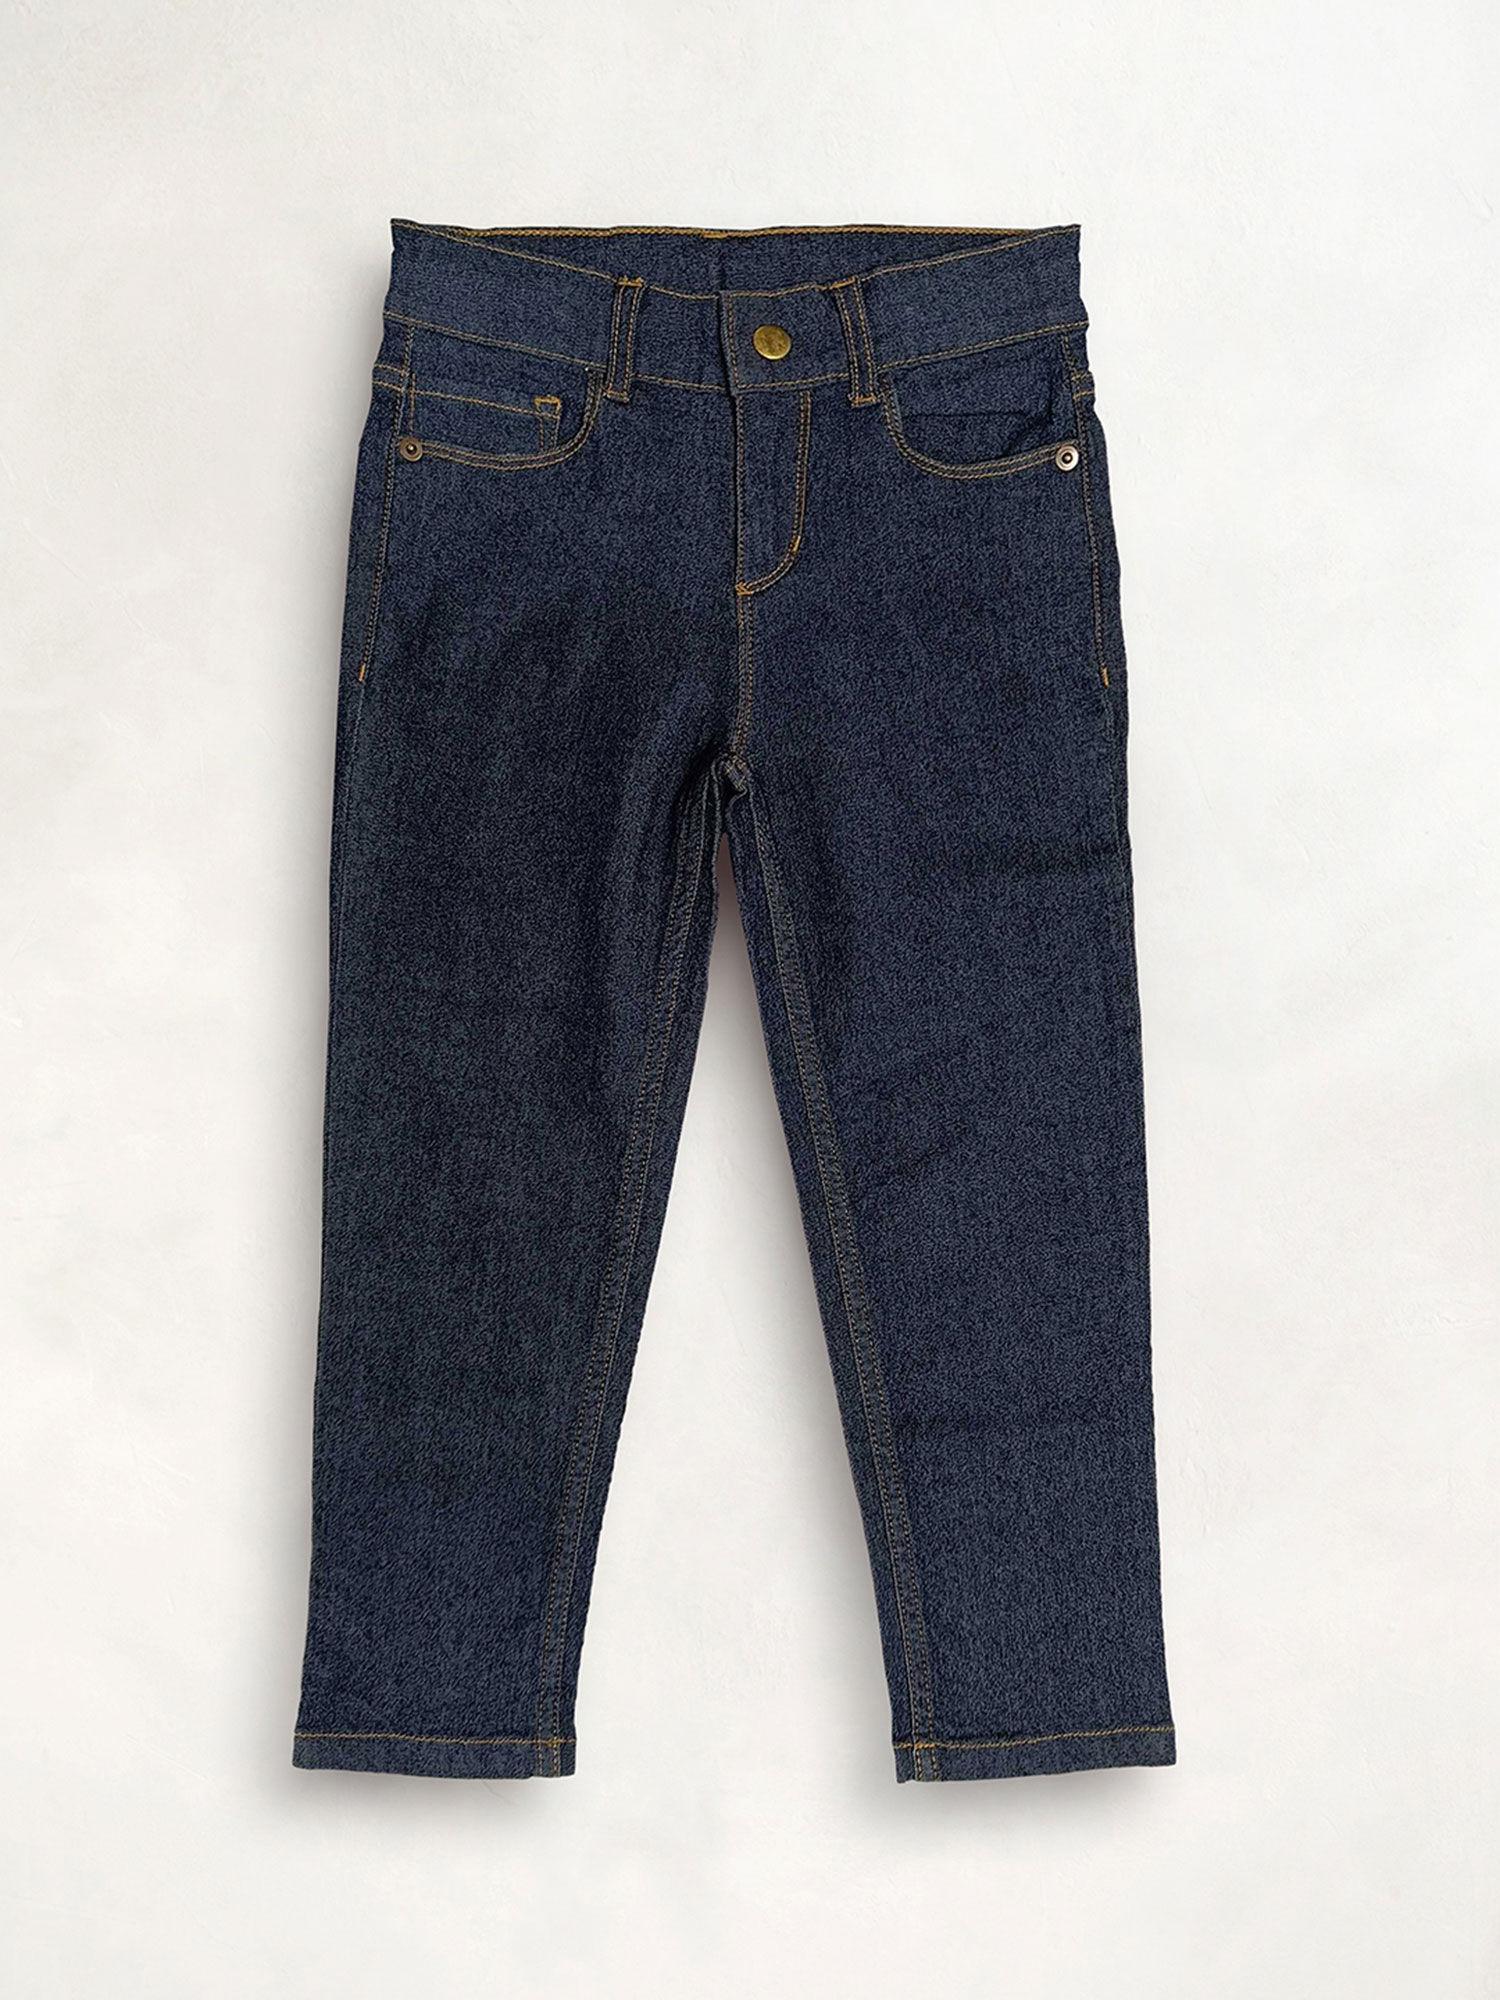 navy blue solid denim habitue jeans